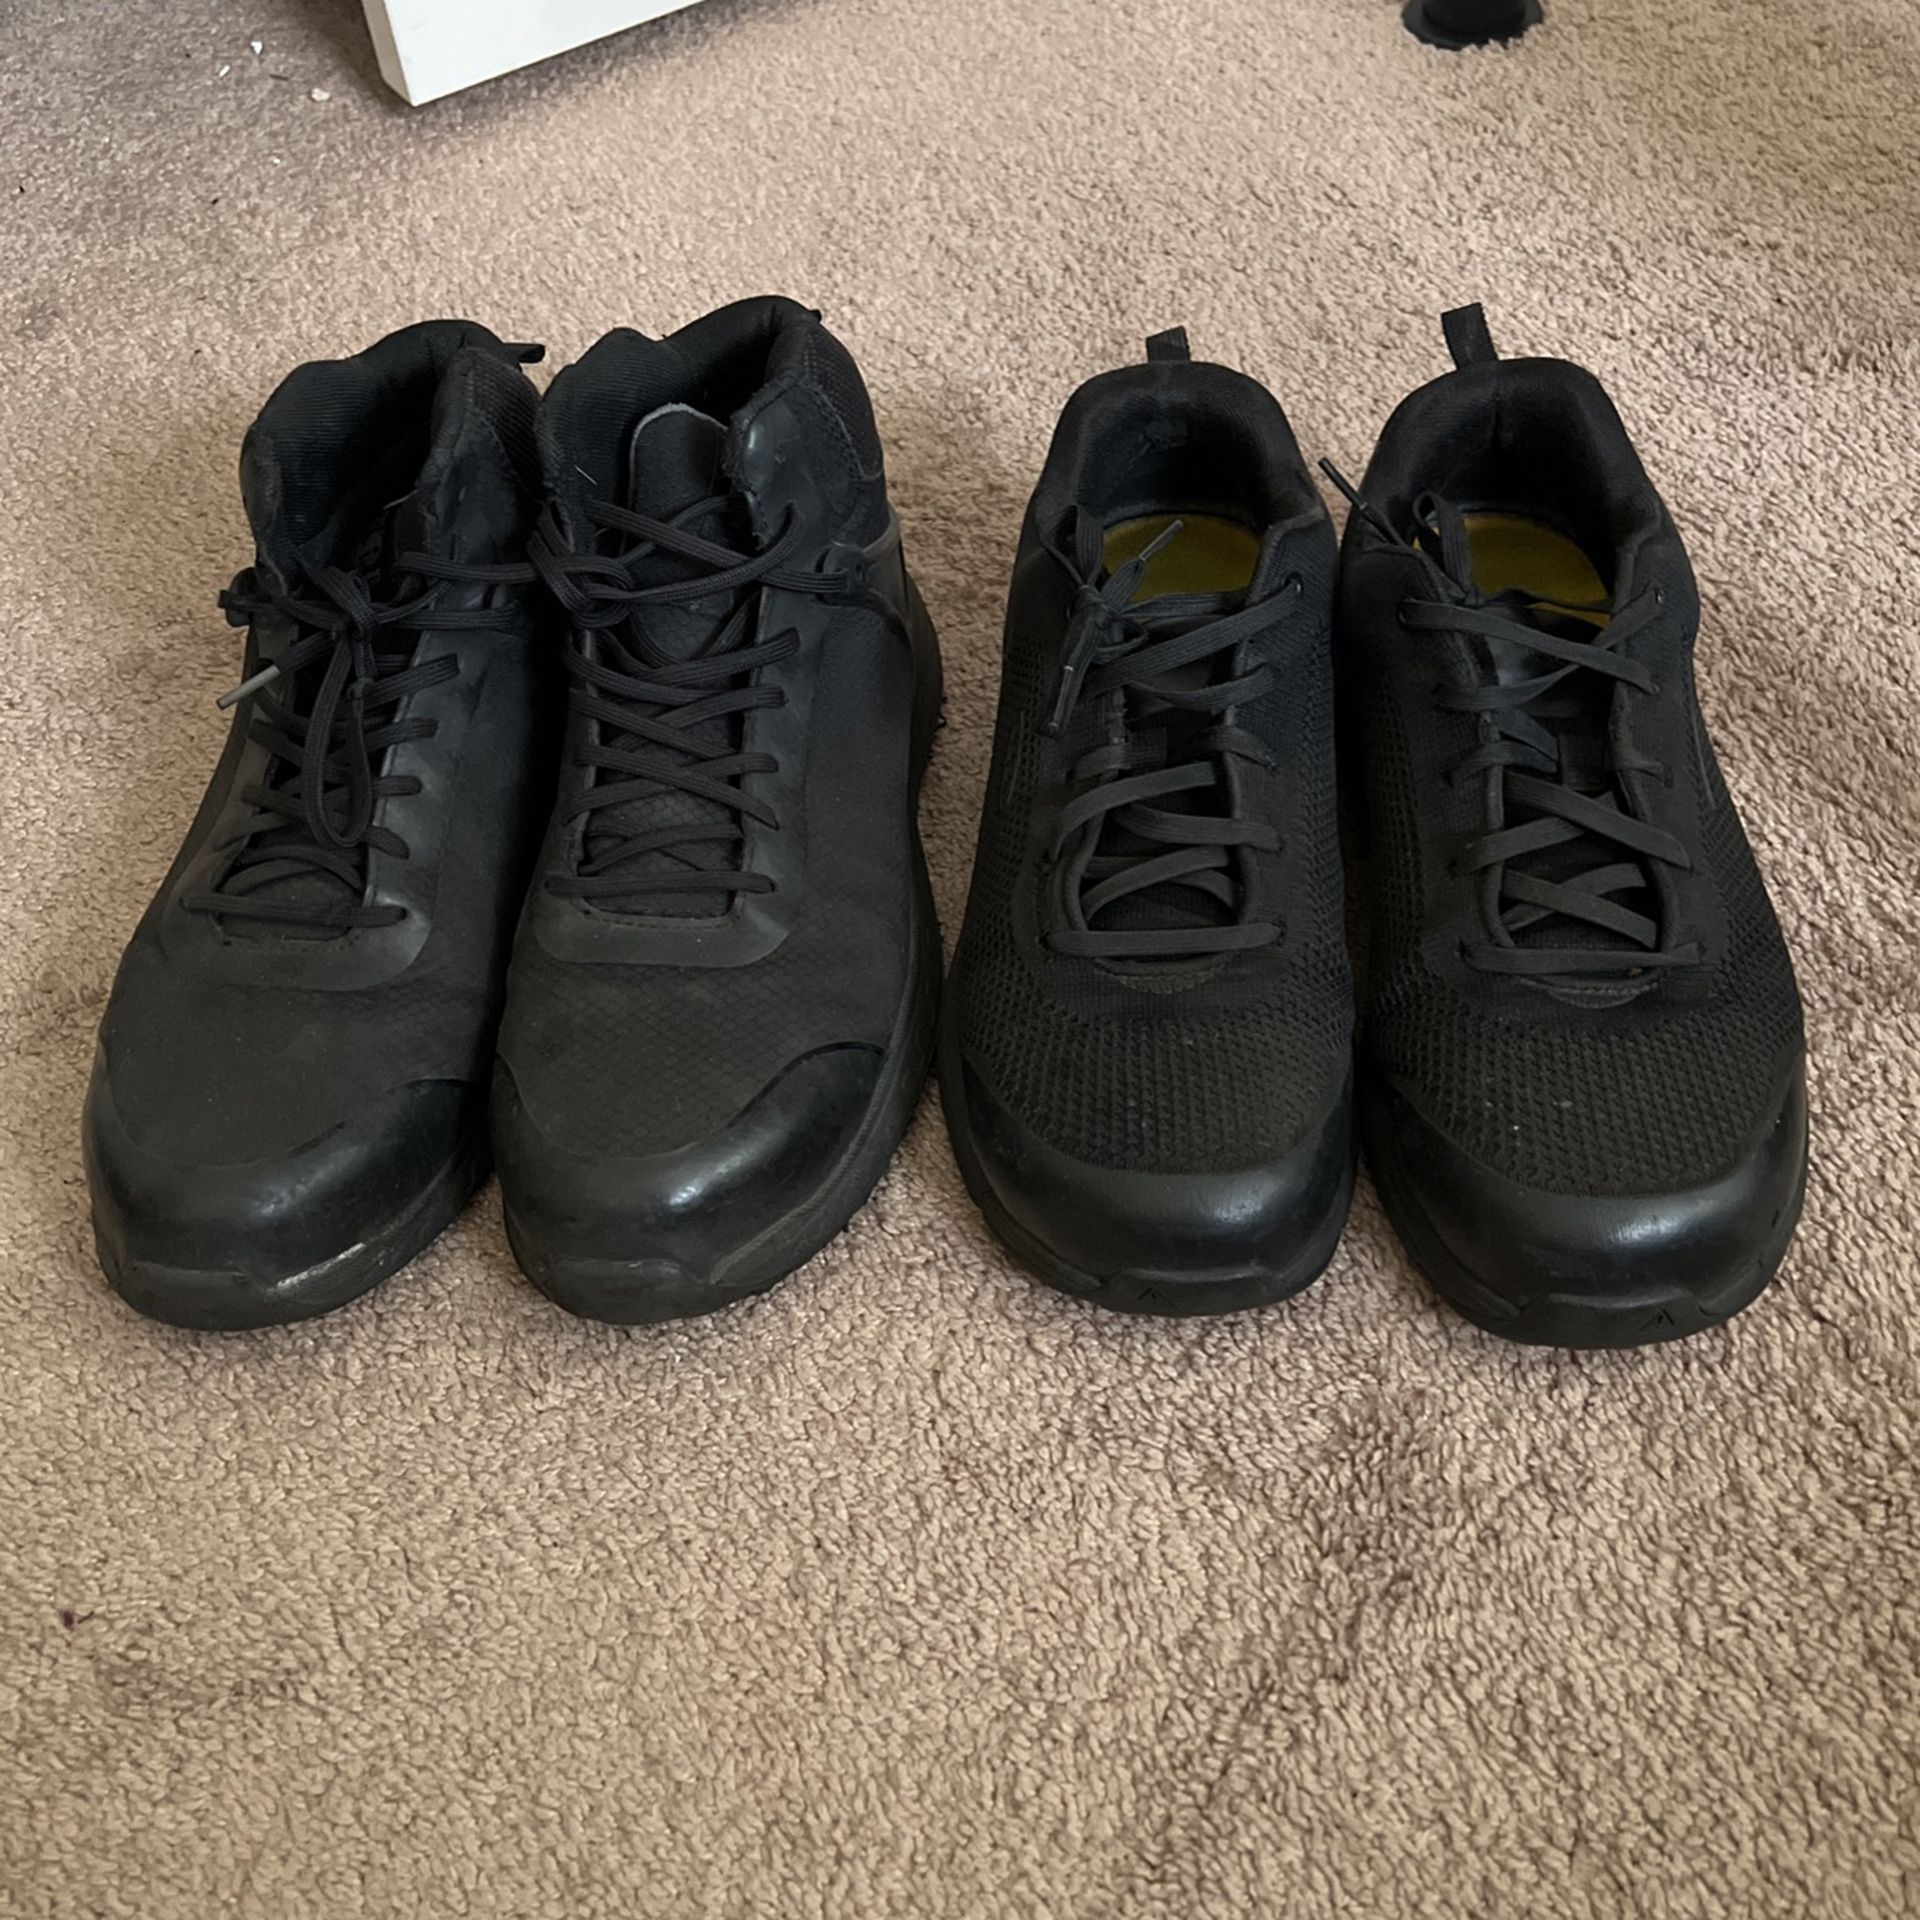 Steel Toe Work Shoes Size 12